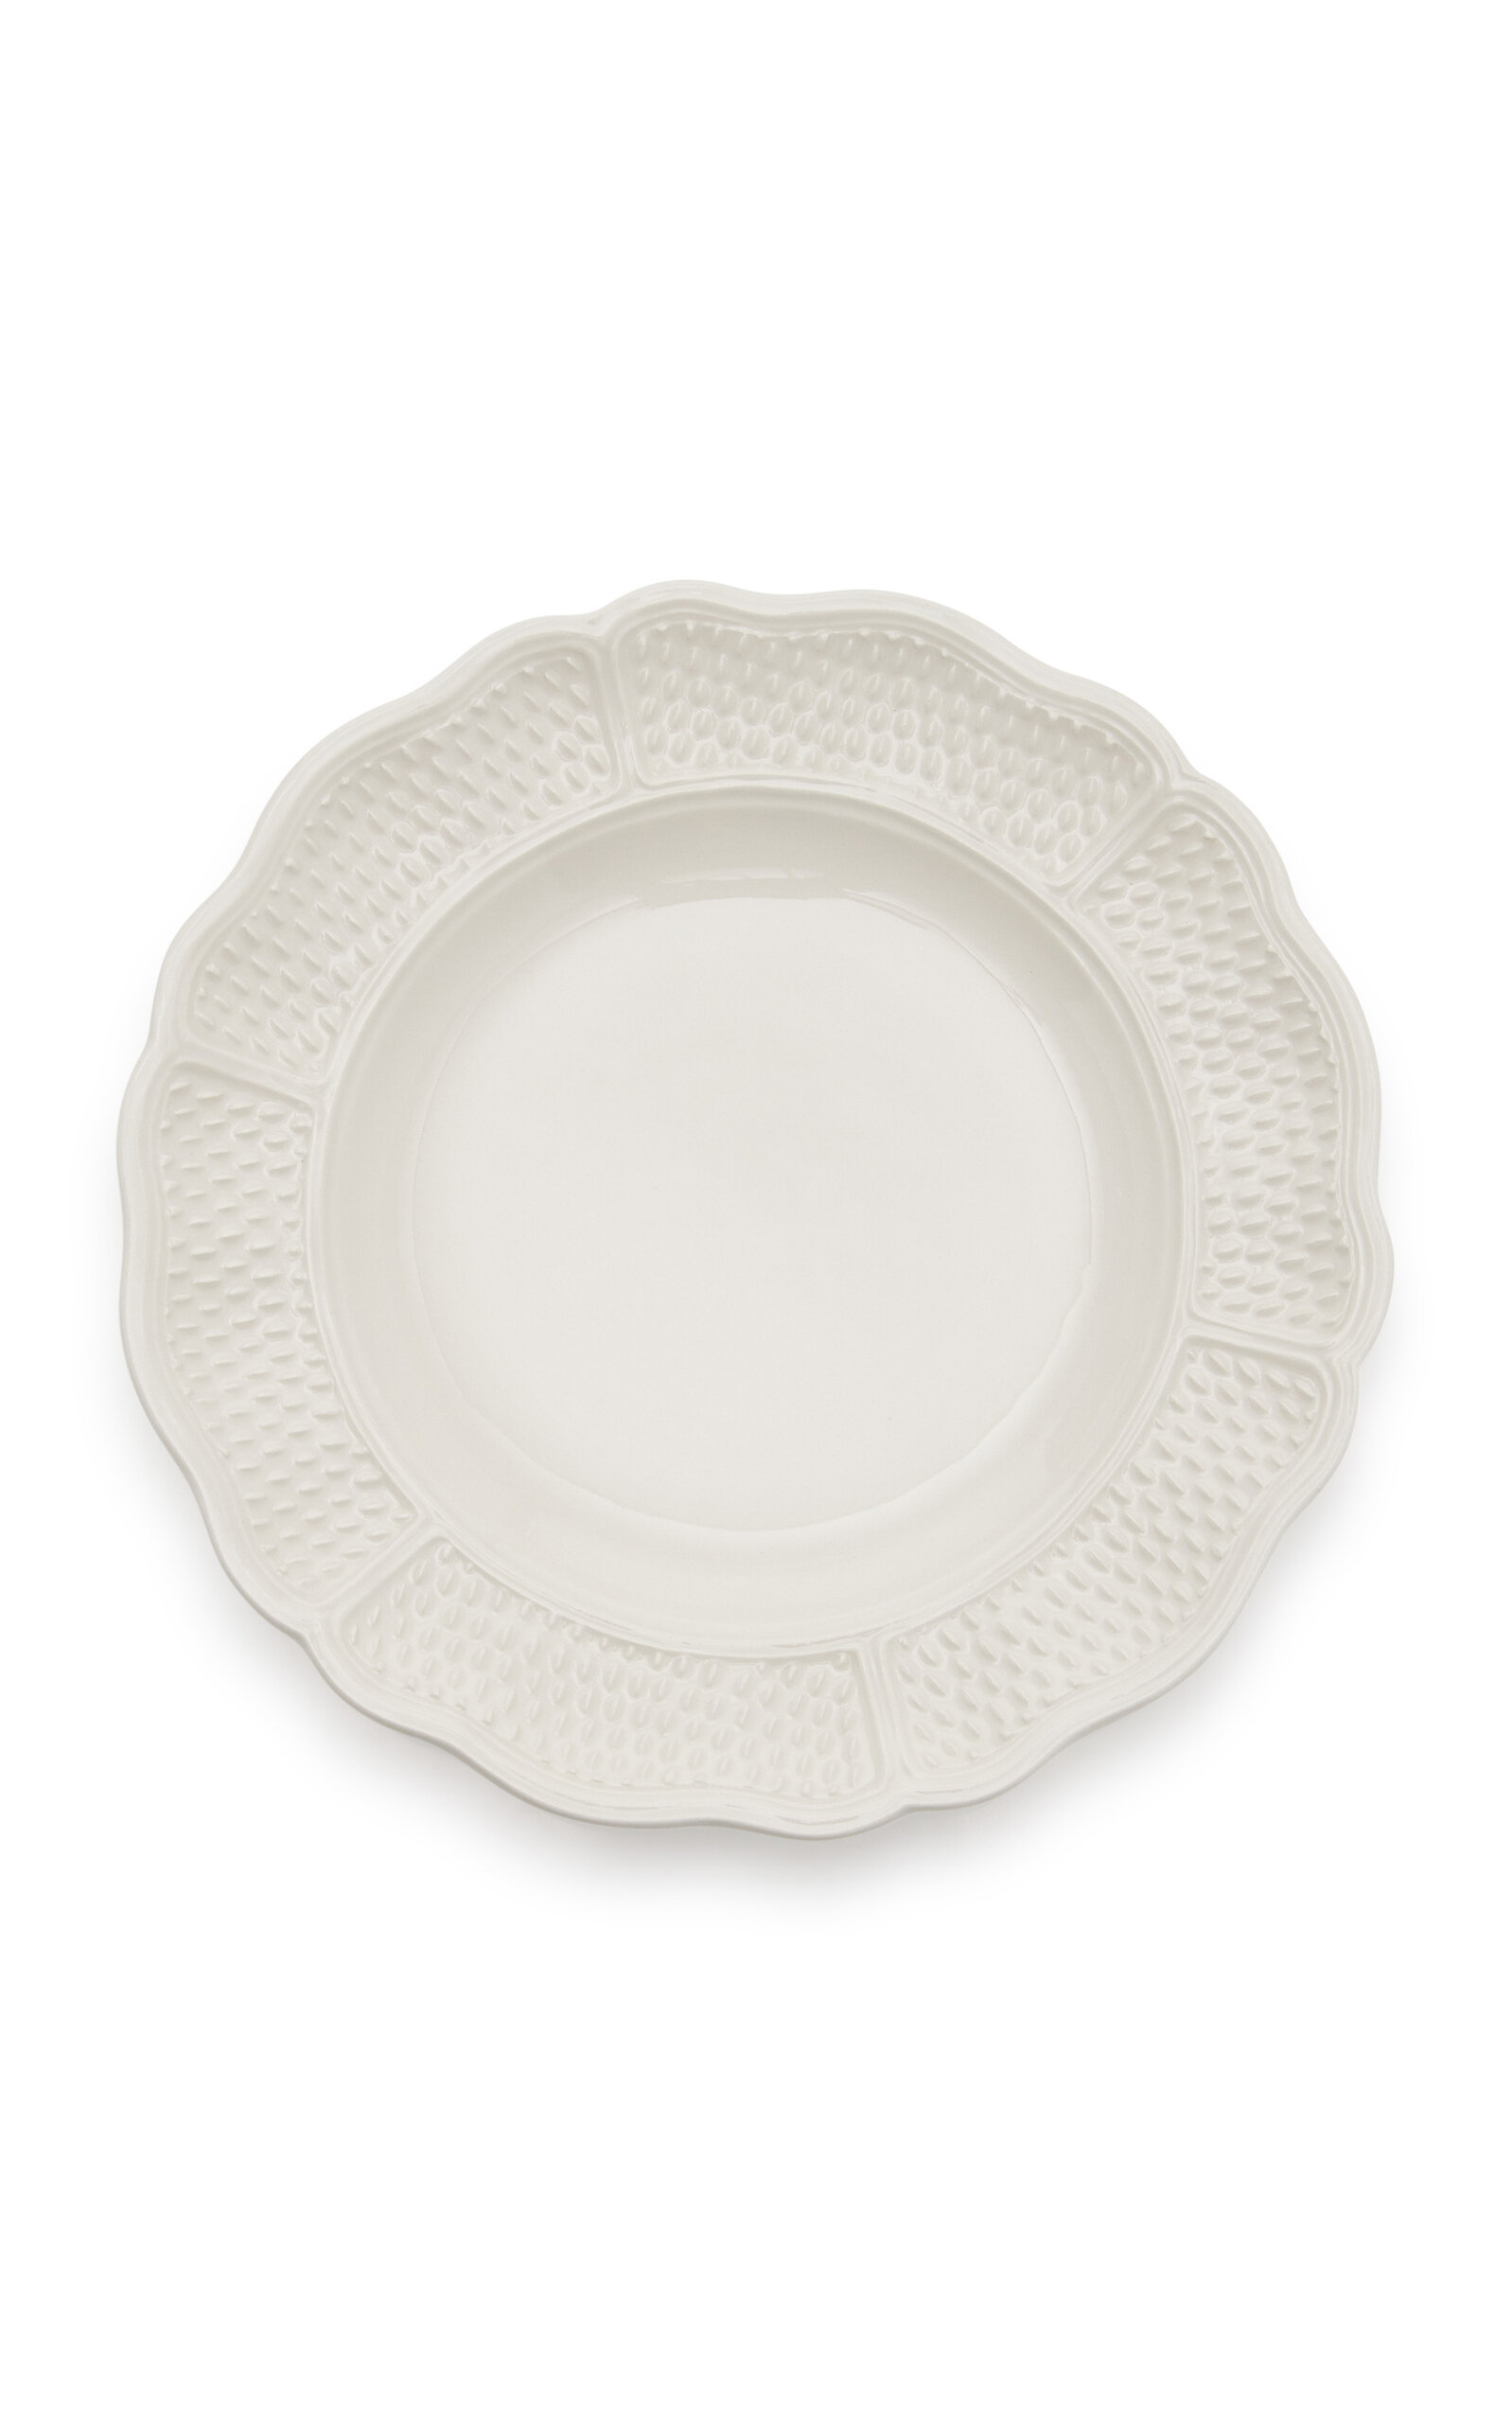 Moda Domus Doots Creamware Dessert Plate In White